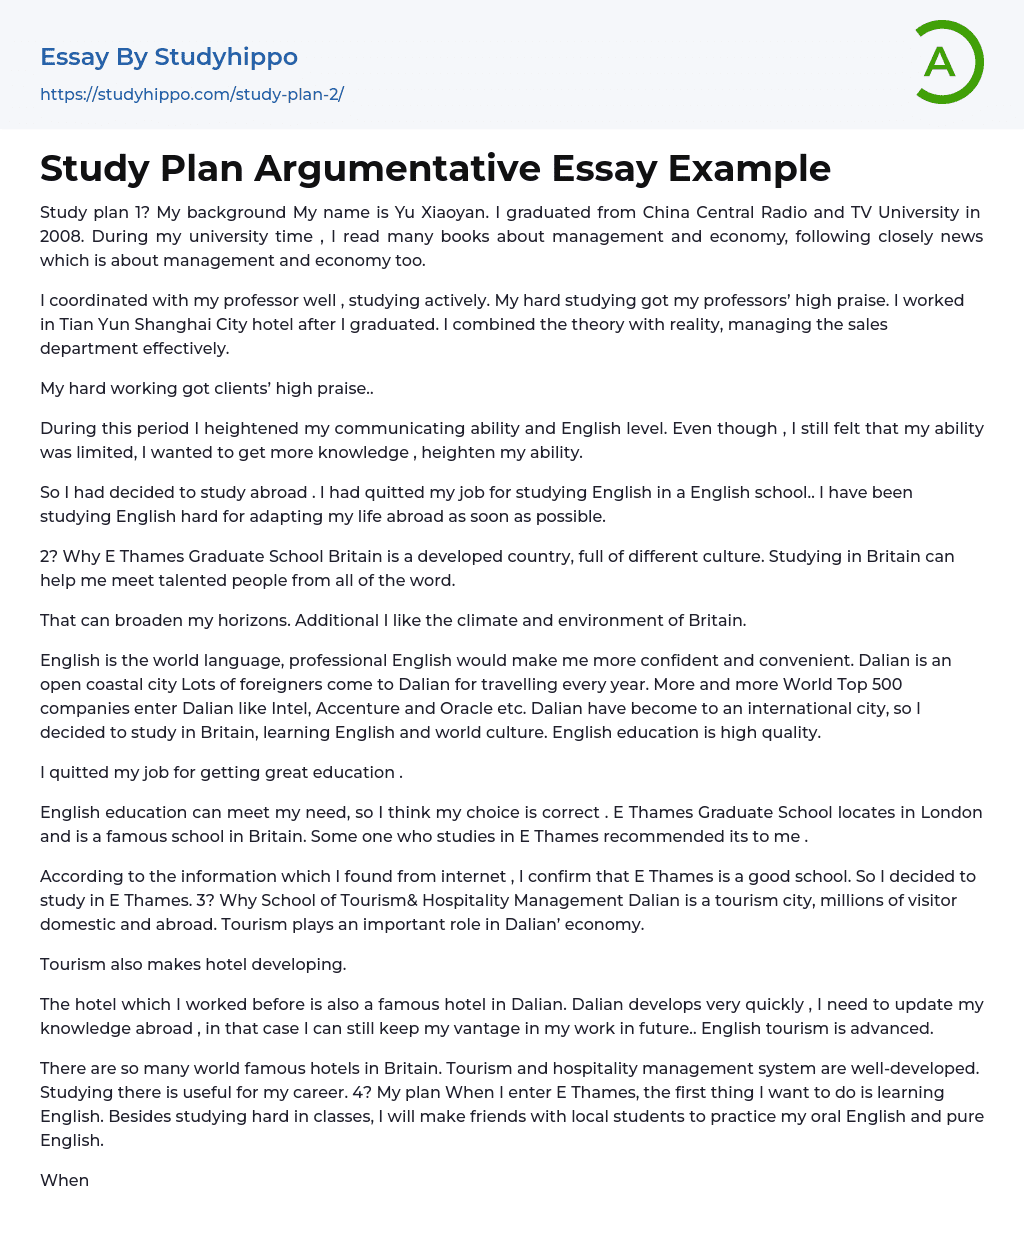 Study Plan Argumentative Essay Example